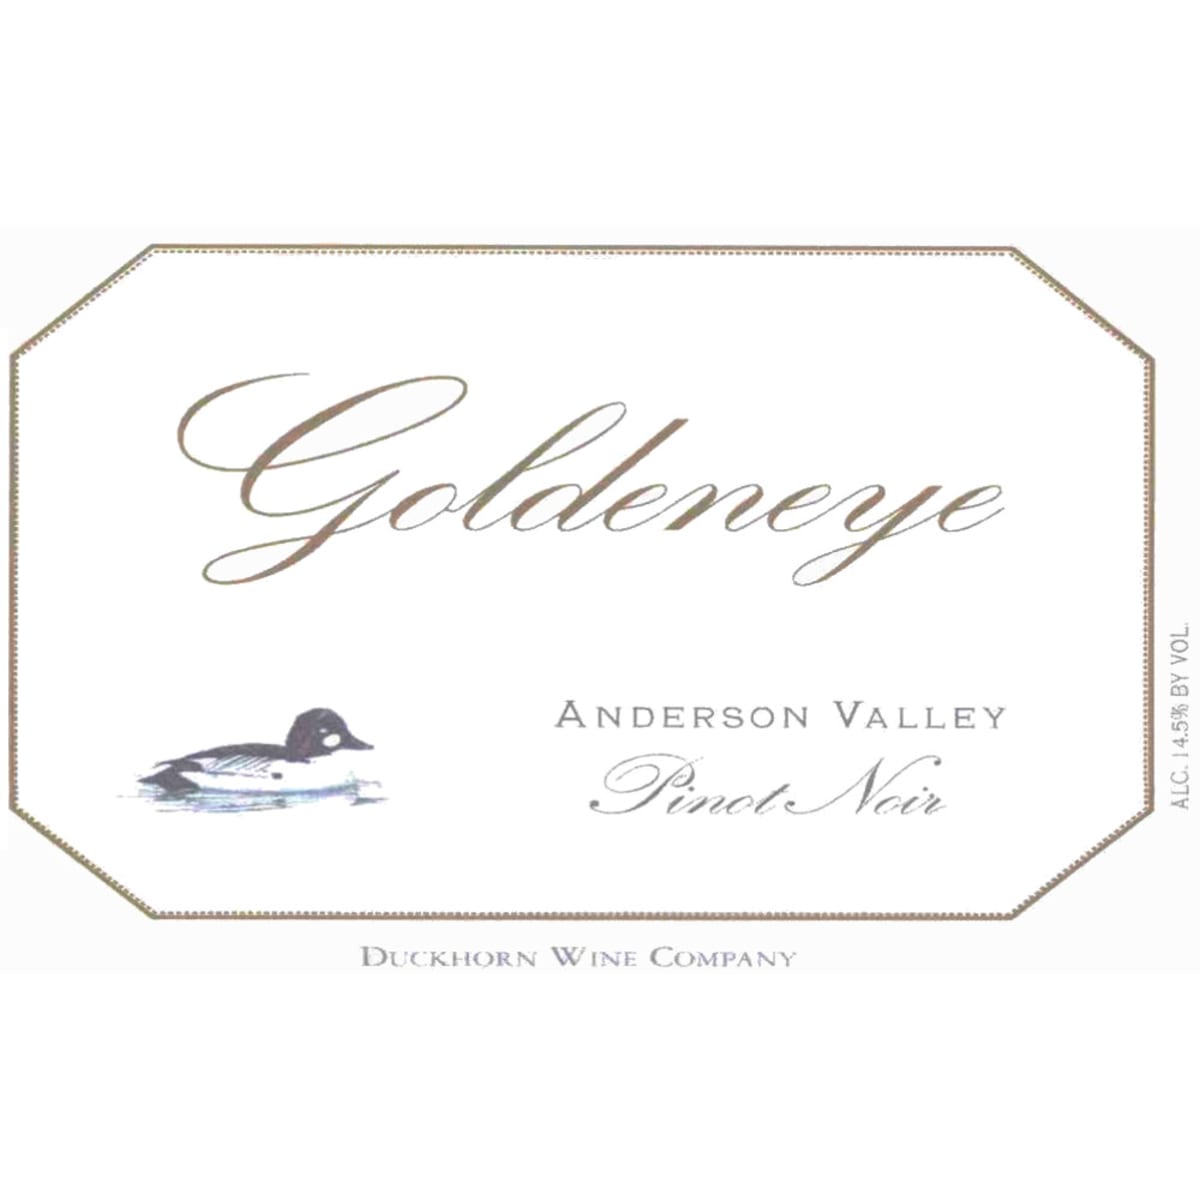 Goldeneye Anderson Valley Pinot Noir 2006 Front Label